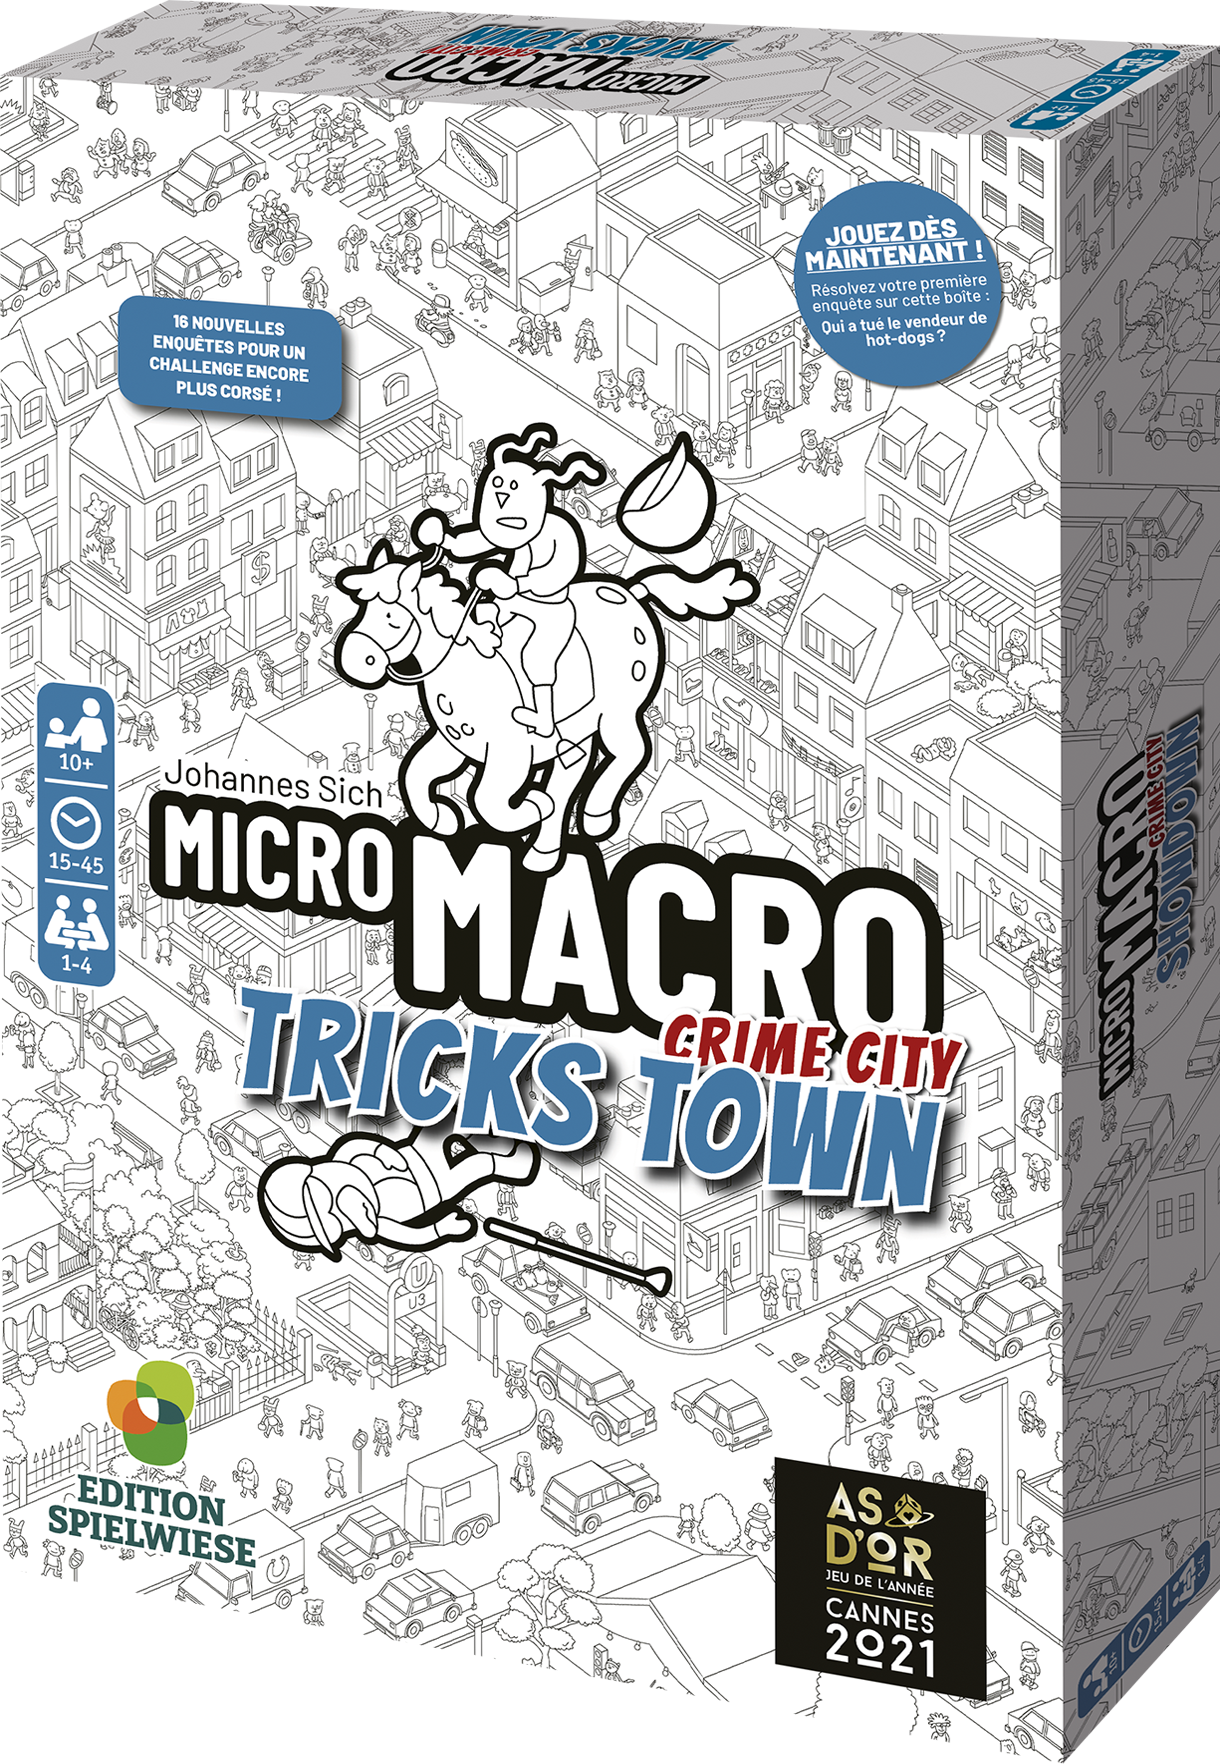 Micro Macro 3 / Tricks town